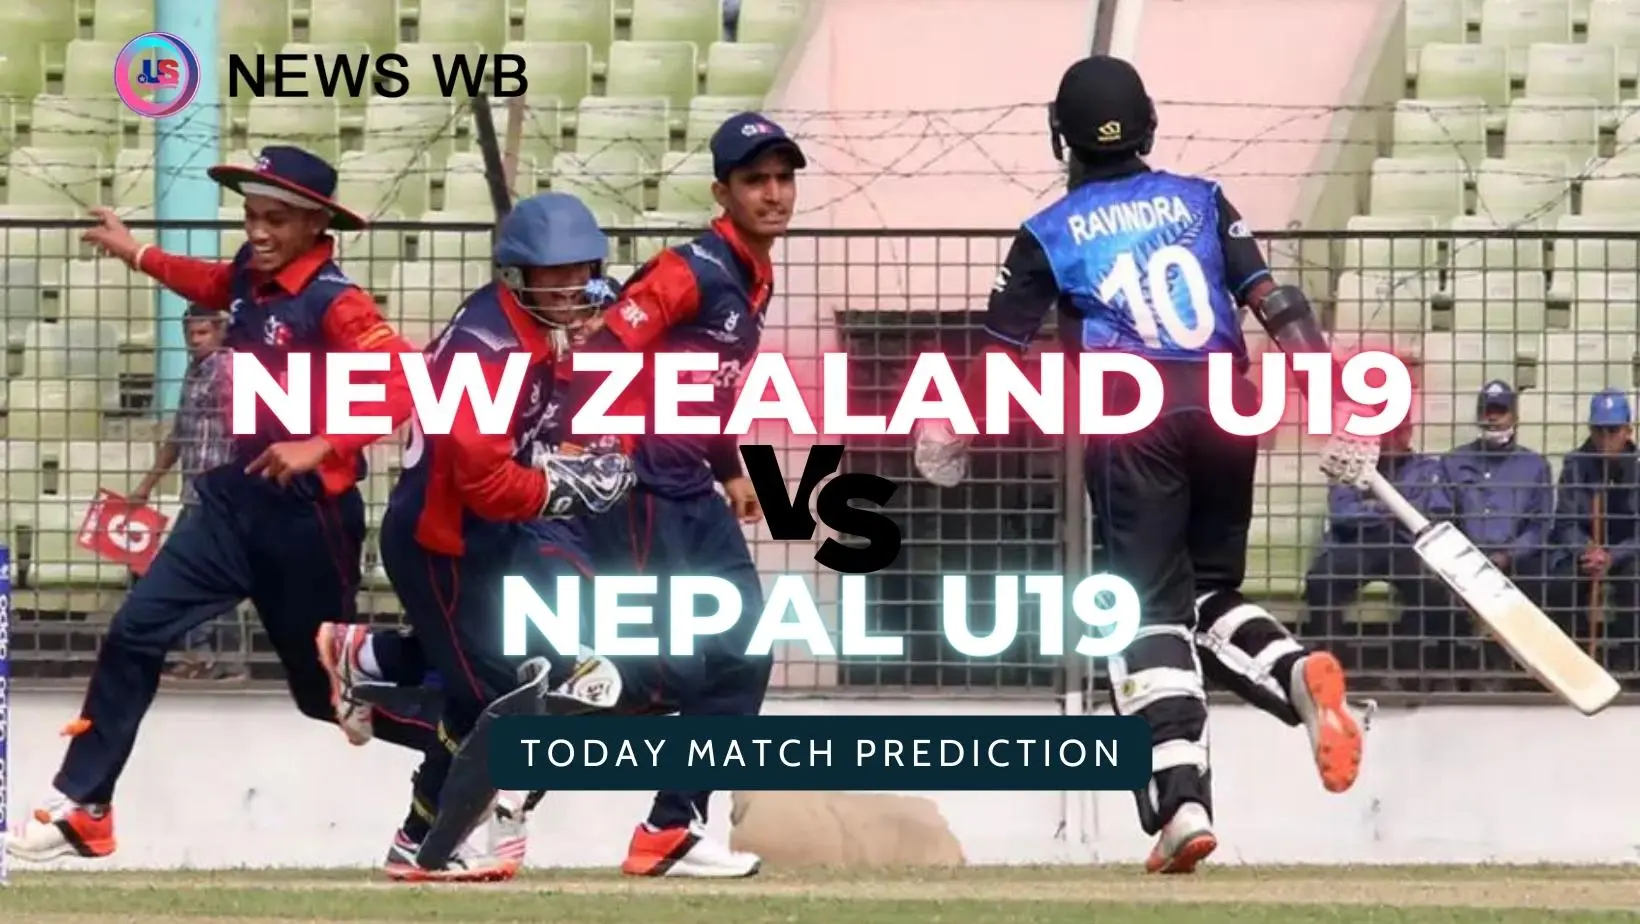 Today Match Prediction: NZ U19 vs NEP U19 Dream11 Team, New Zealand U19 vs Nepal U19 7th Match, Group D, Who Will Win?